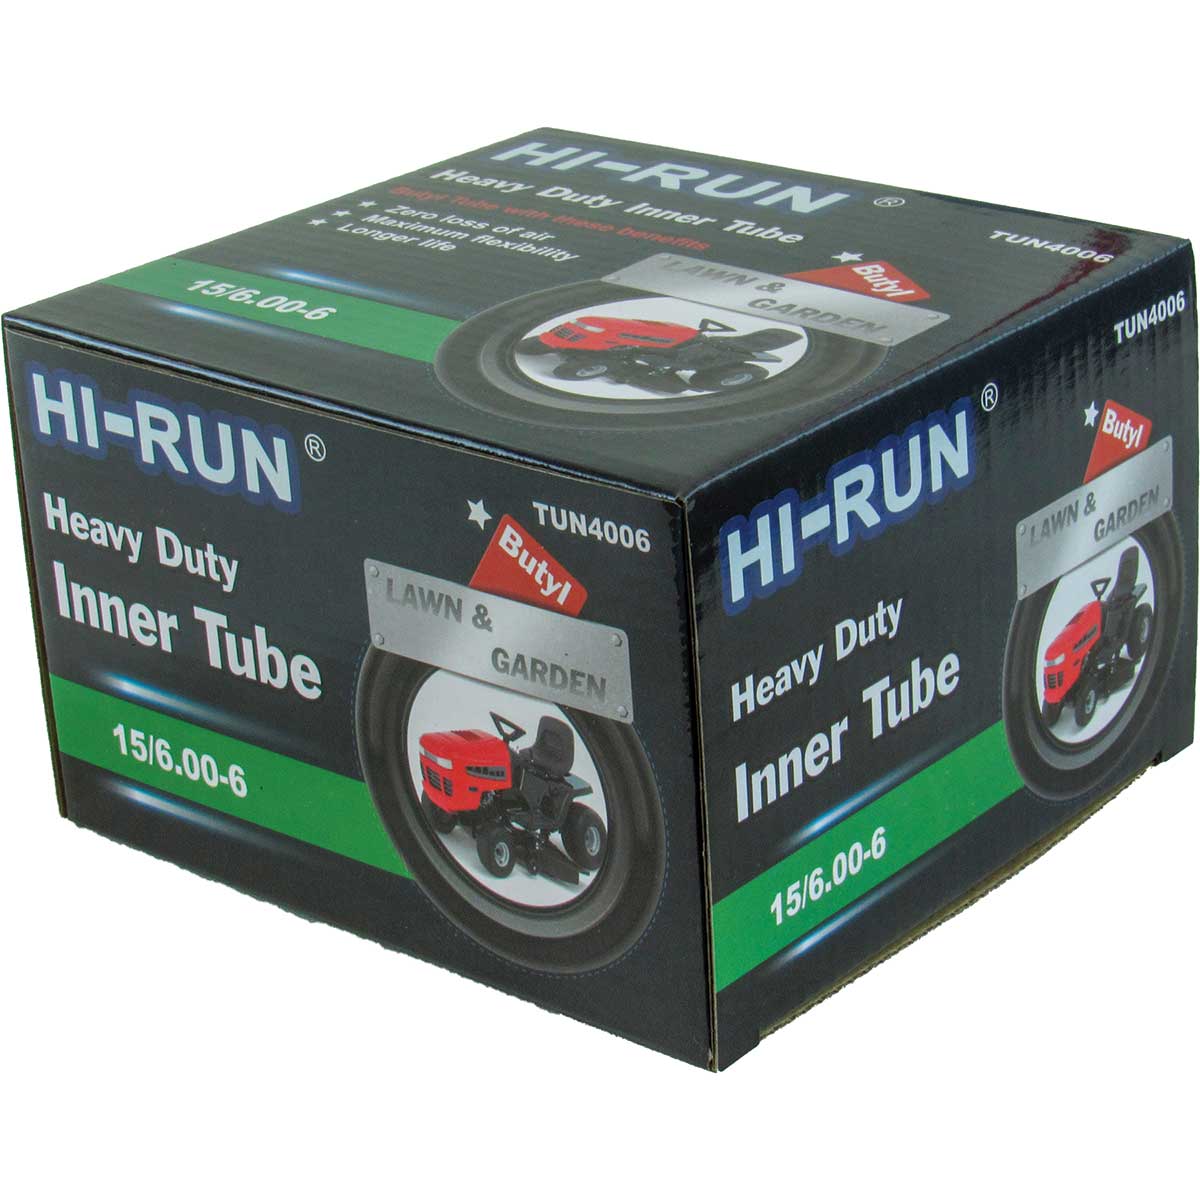 Hi-Run Lawn & Garden Tire Inner Tubes